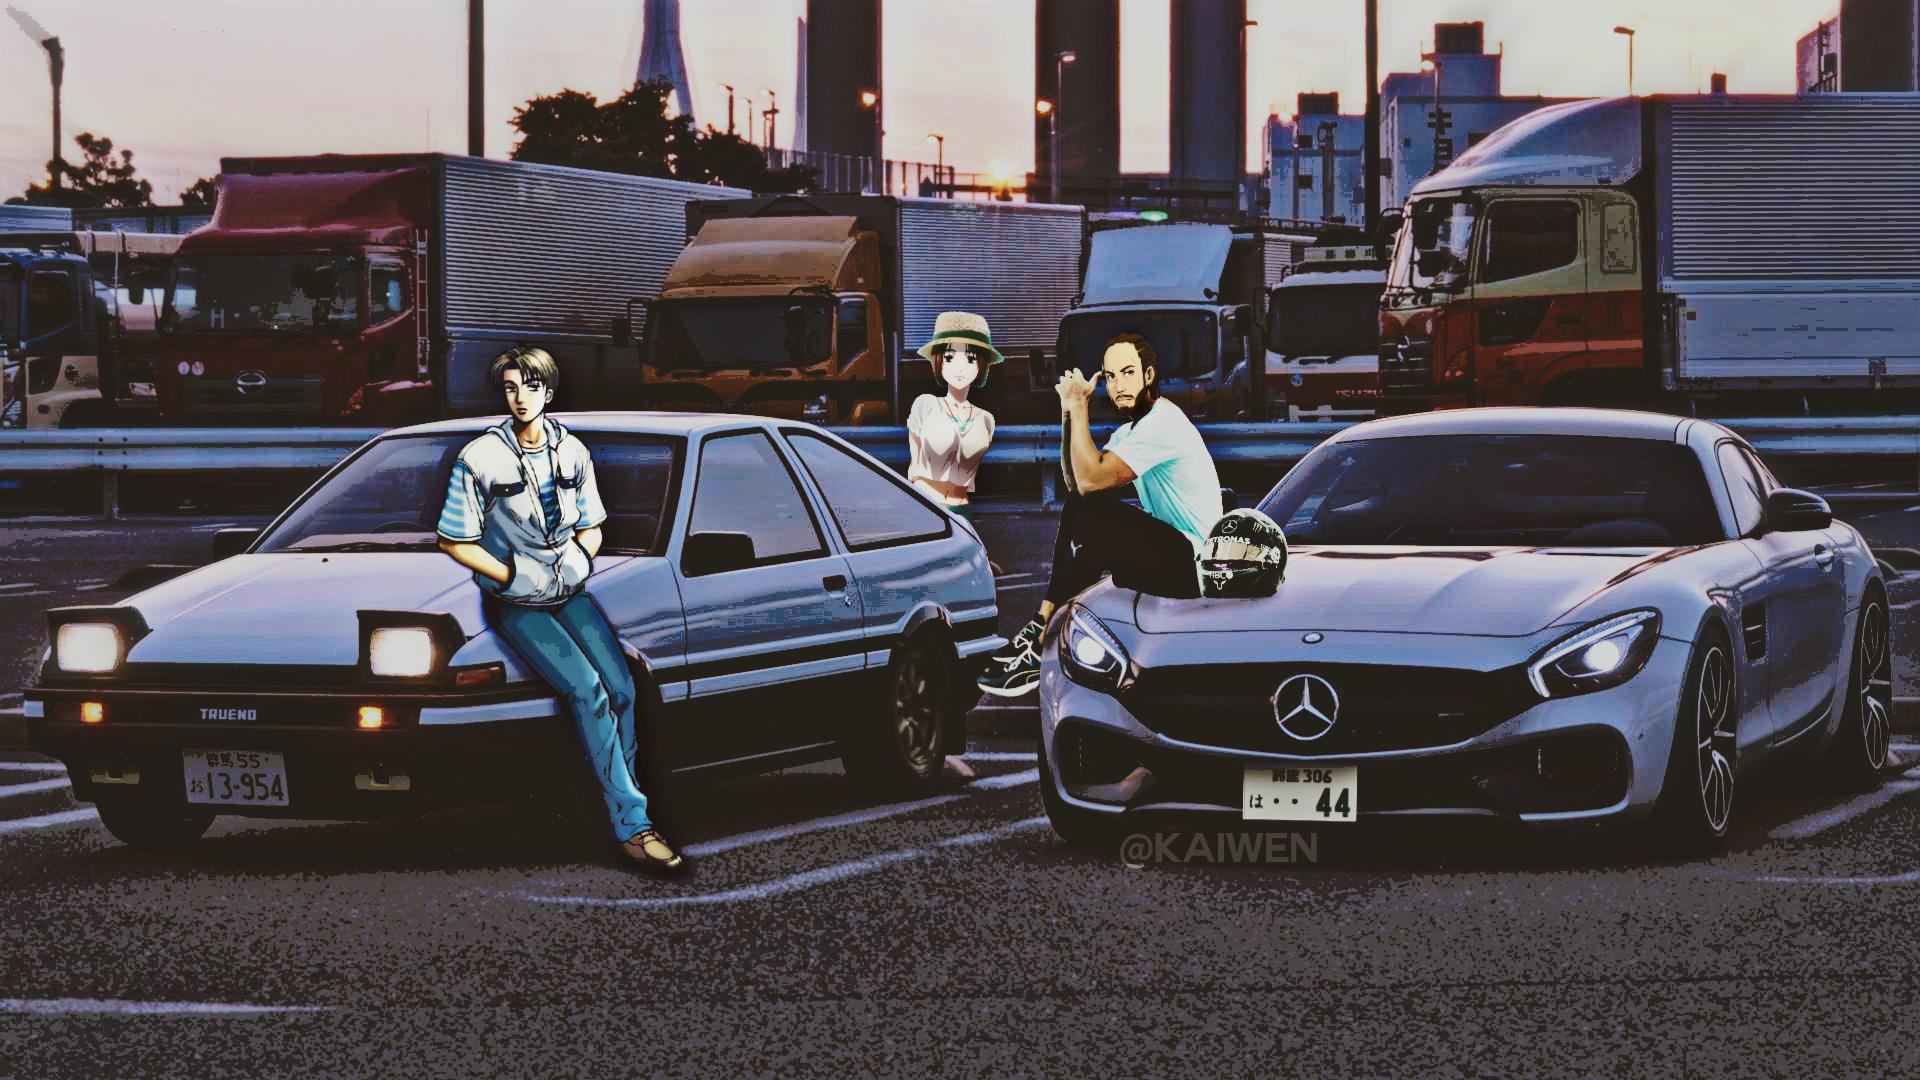 Takumi Fujiwara, Natsuki Mogi and Lewis Hamilton (Maybe he's that Mercedes guy that Natsuki could have fun with) #TakumiItsJames